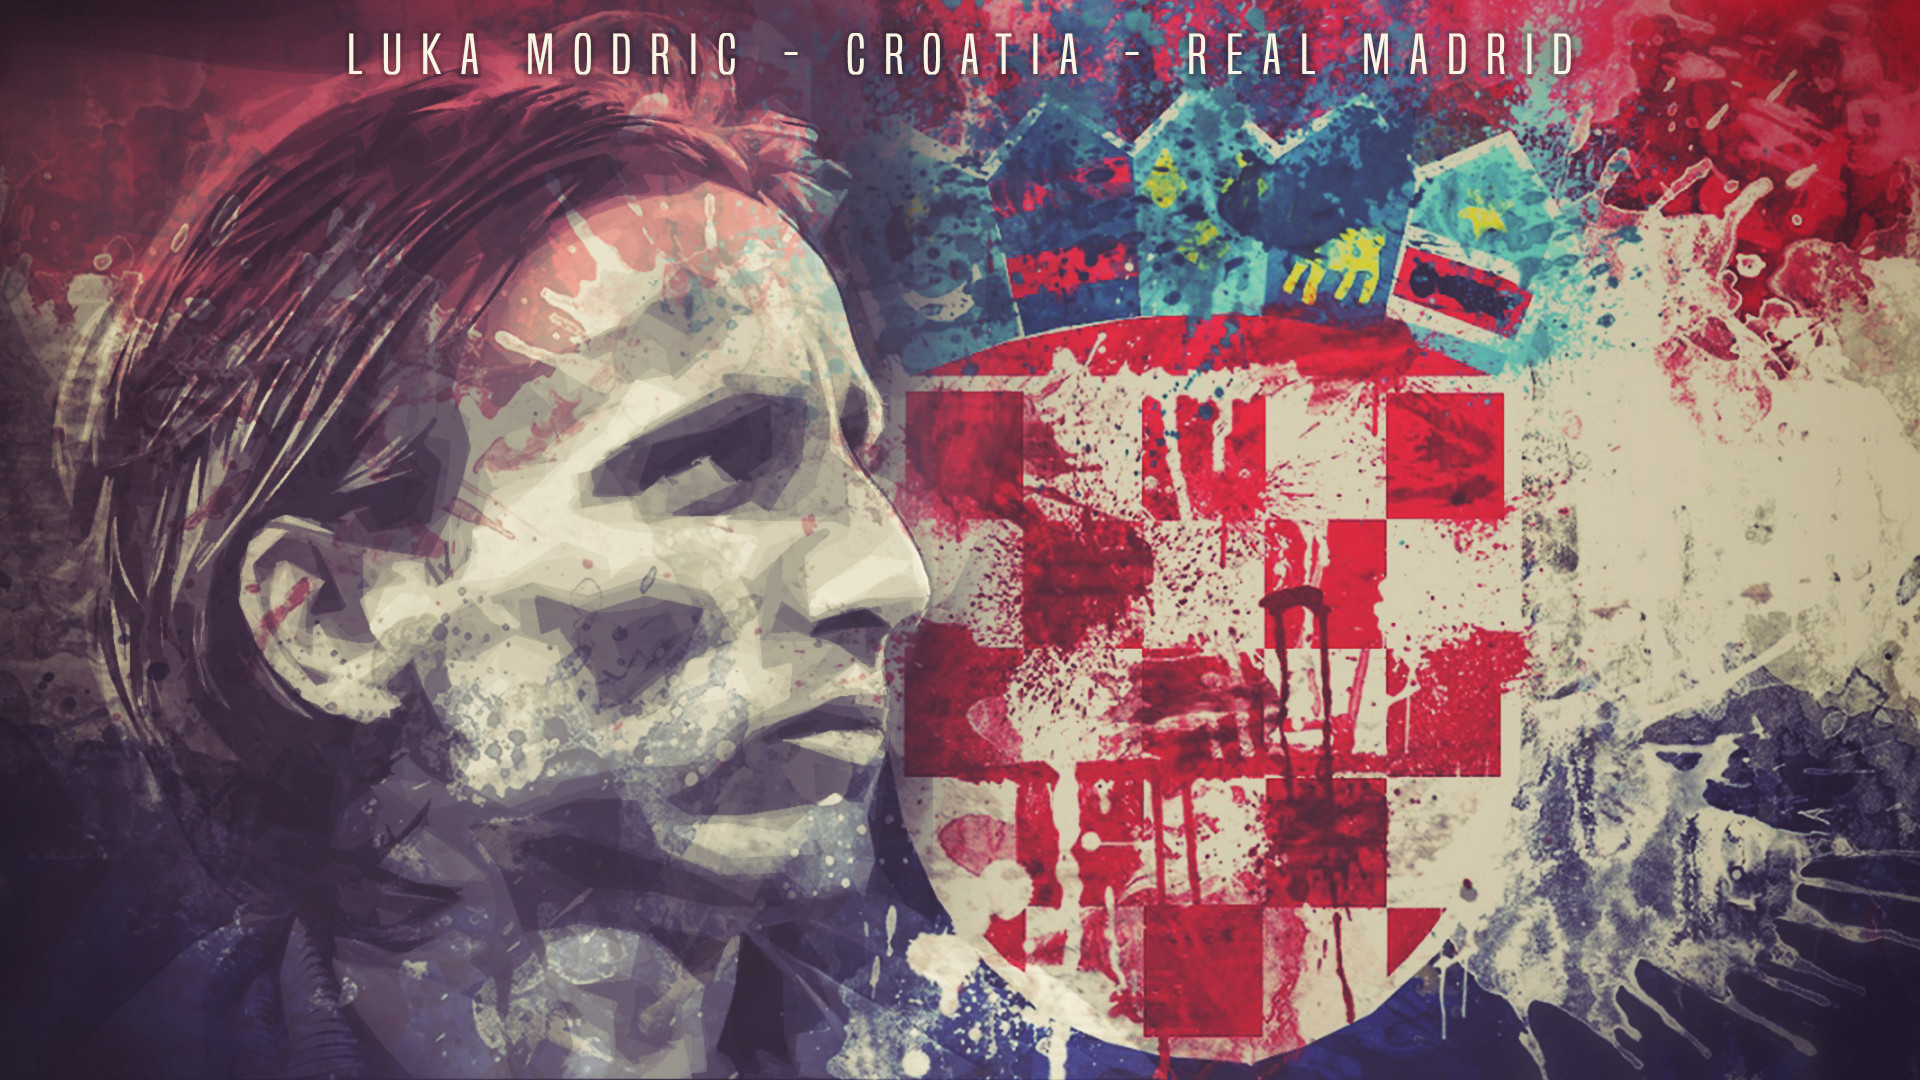 1920x1080 Luka Modric - Croatia by Kerimov23 Luka Modric - Croatia by Kerimov23